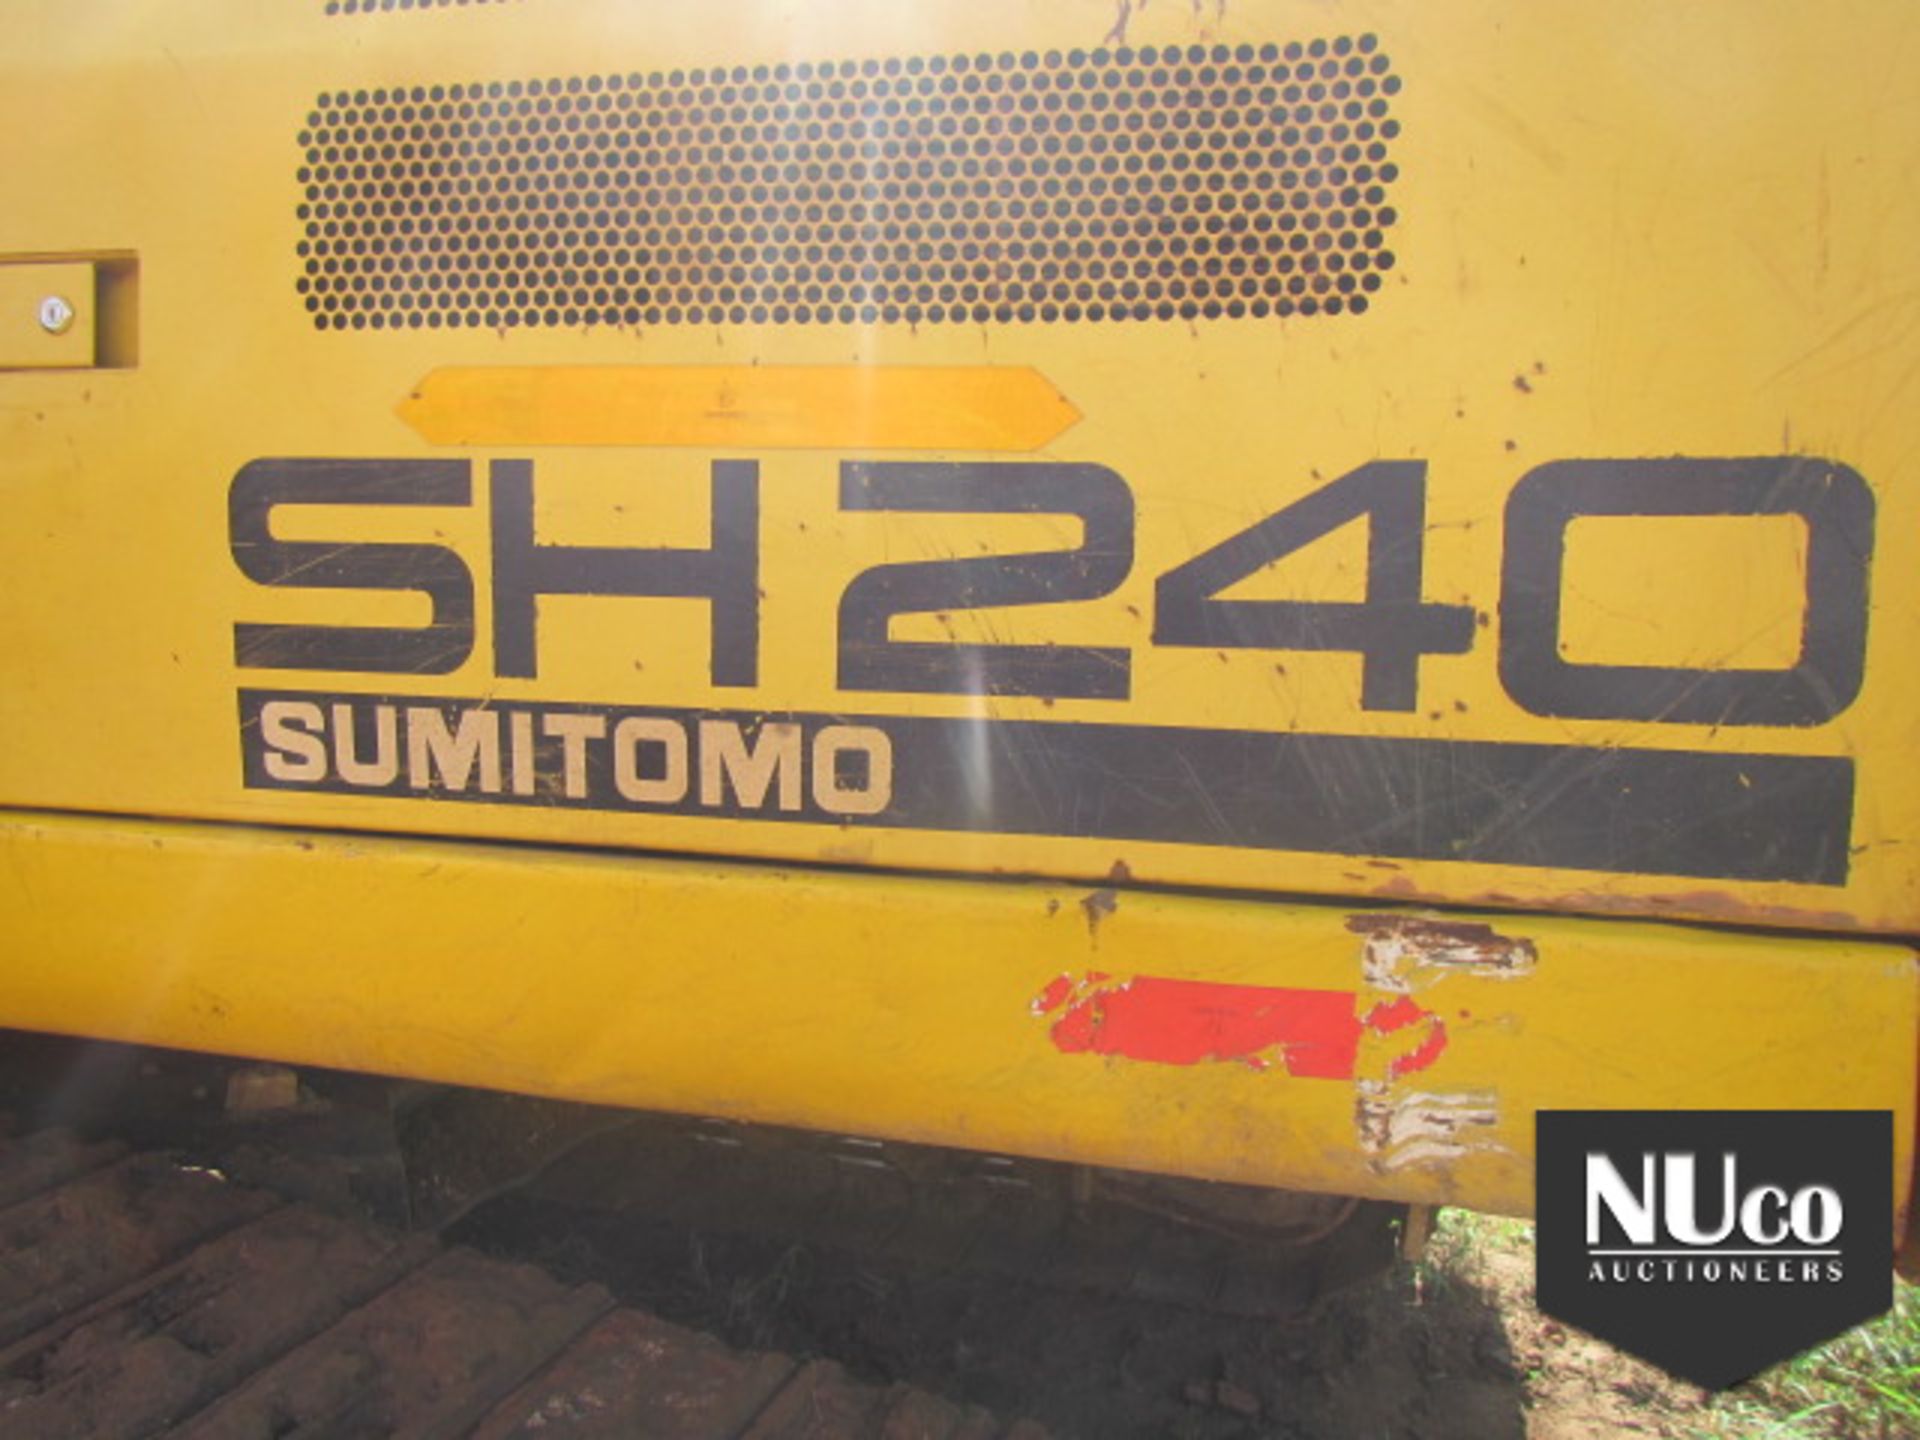 SUMITOMO SH240-5 EXCAVATOR - Image 5 of 9